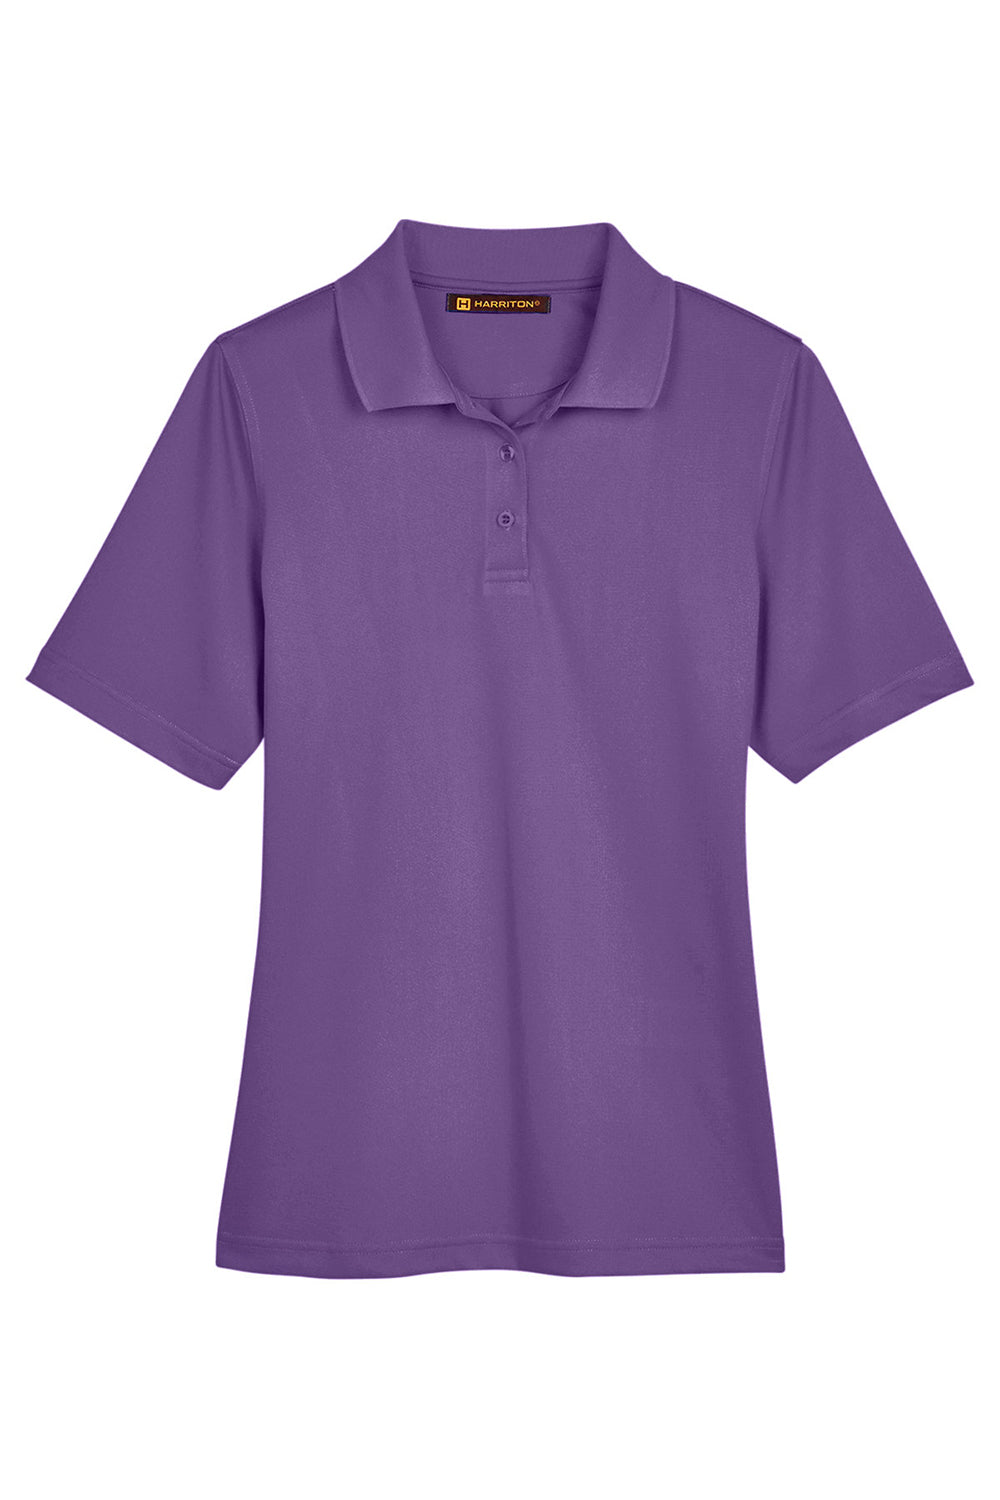 Harriton M348W Womens Advantage Performance Moisture Wicking Short Sleeve Polo Shirt Team Purple Flat Front